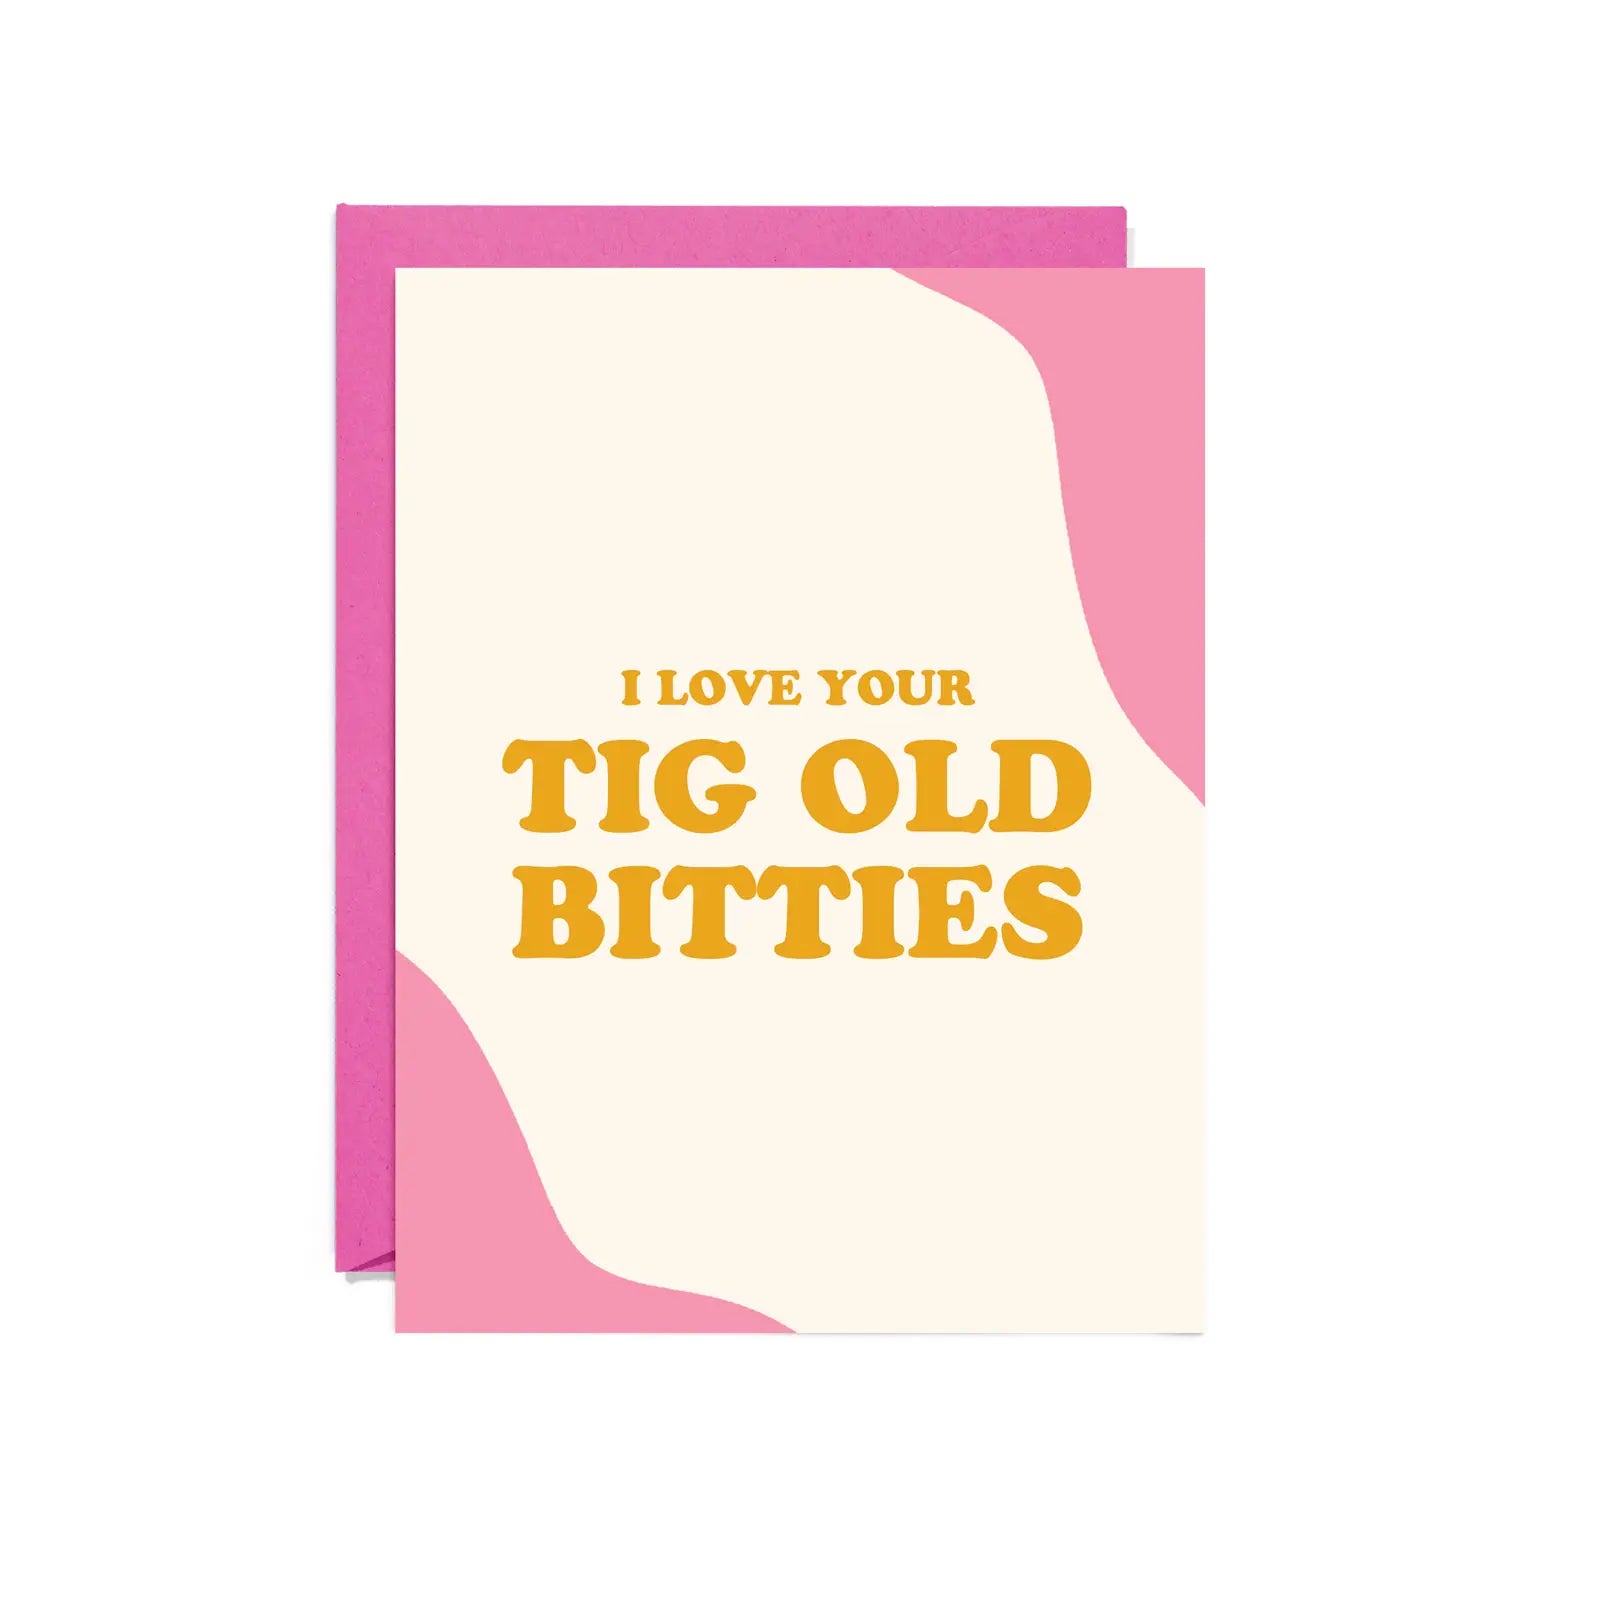 Tig Old Bitties - Greeting Card